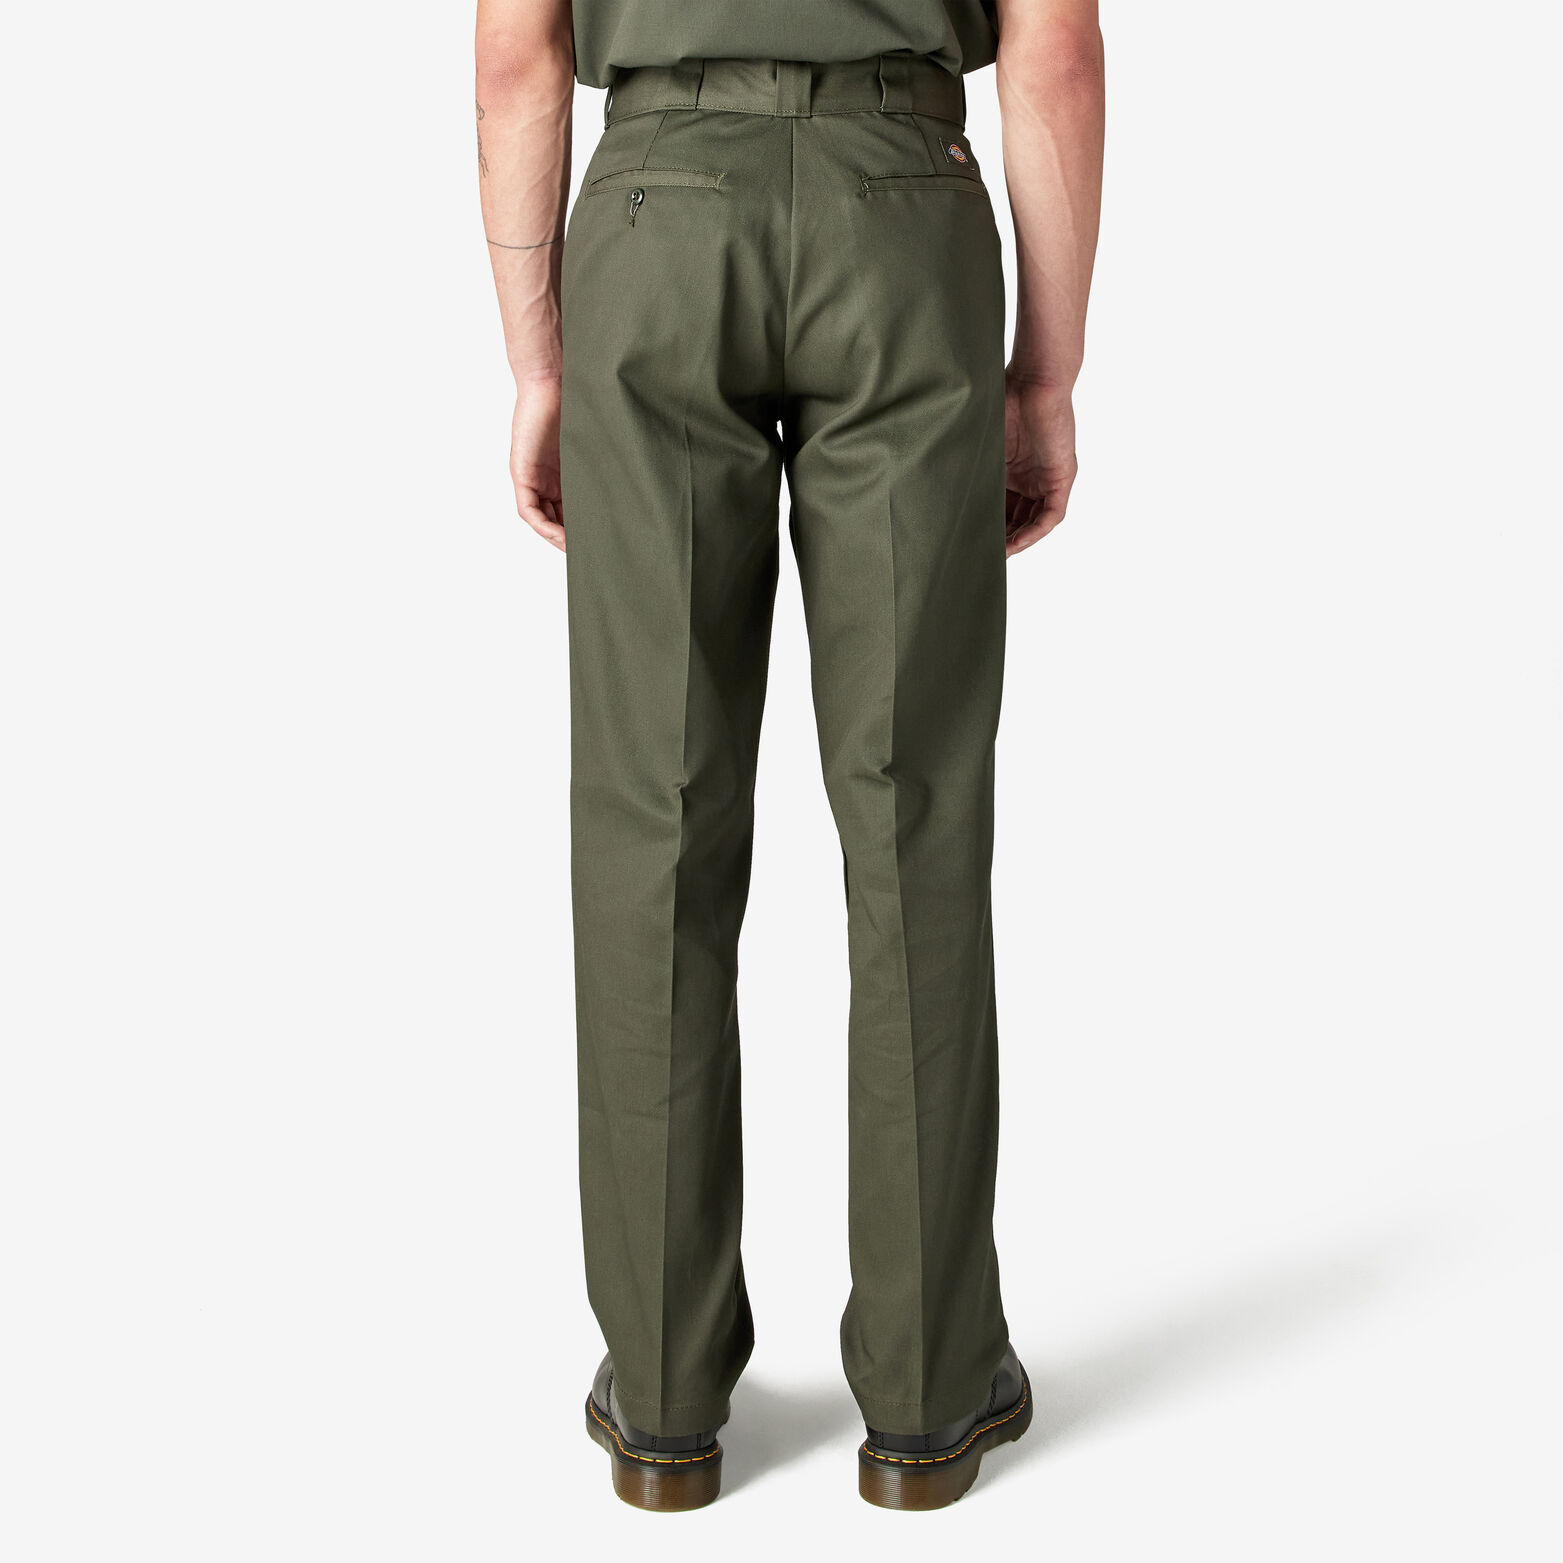 Men's Cargo Pants for sale in Pennsylvania, Alabama, Facebook Marketplace